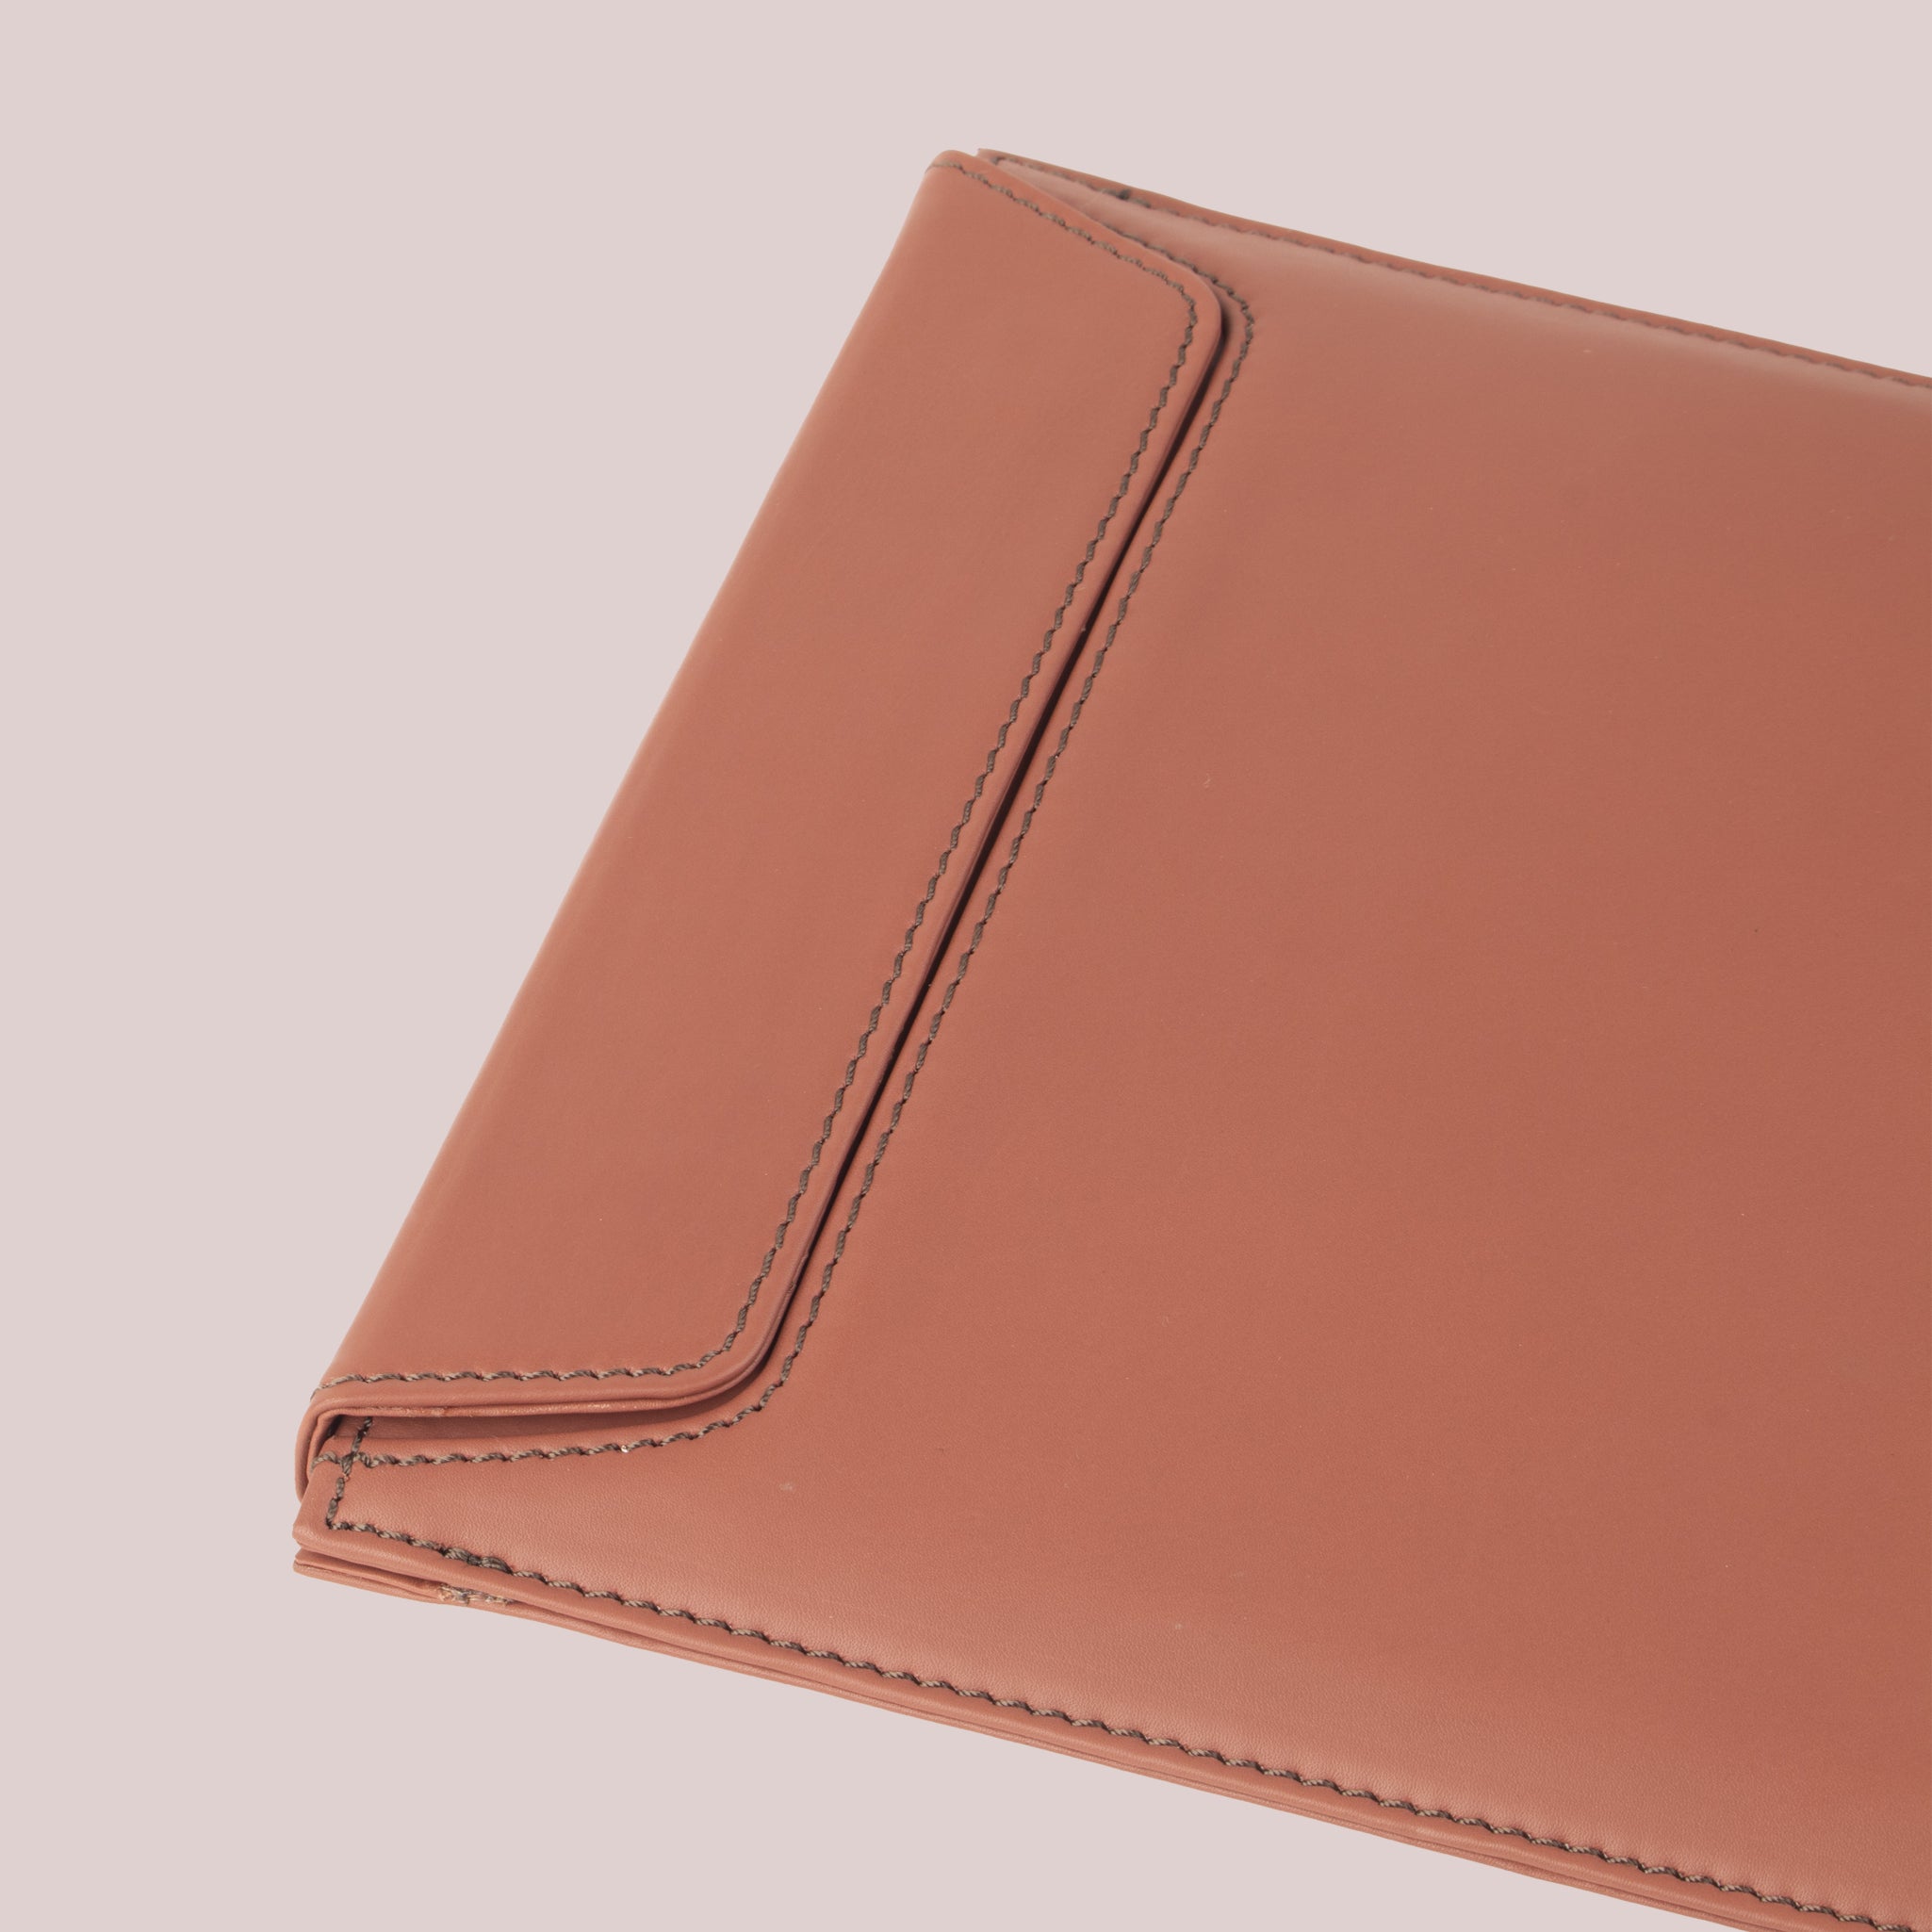 Buy brown  leather sleeve for Macbook online